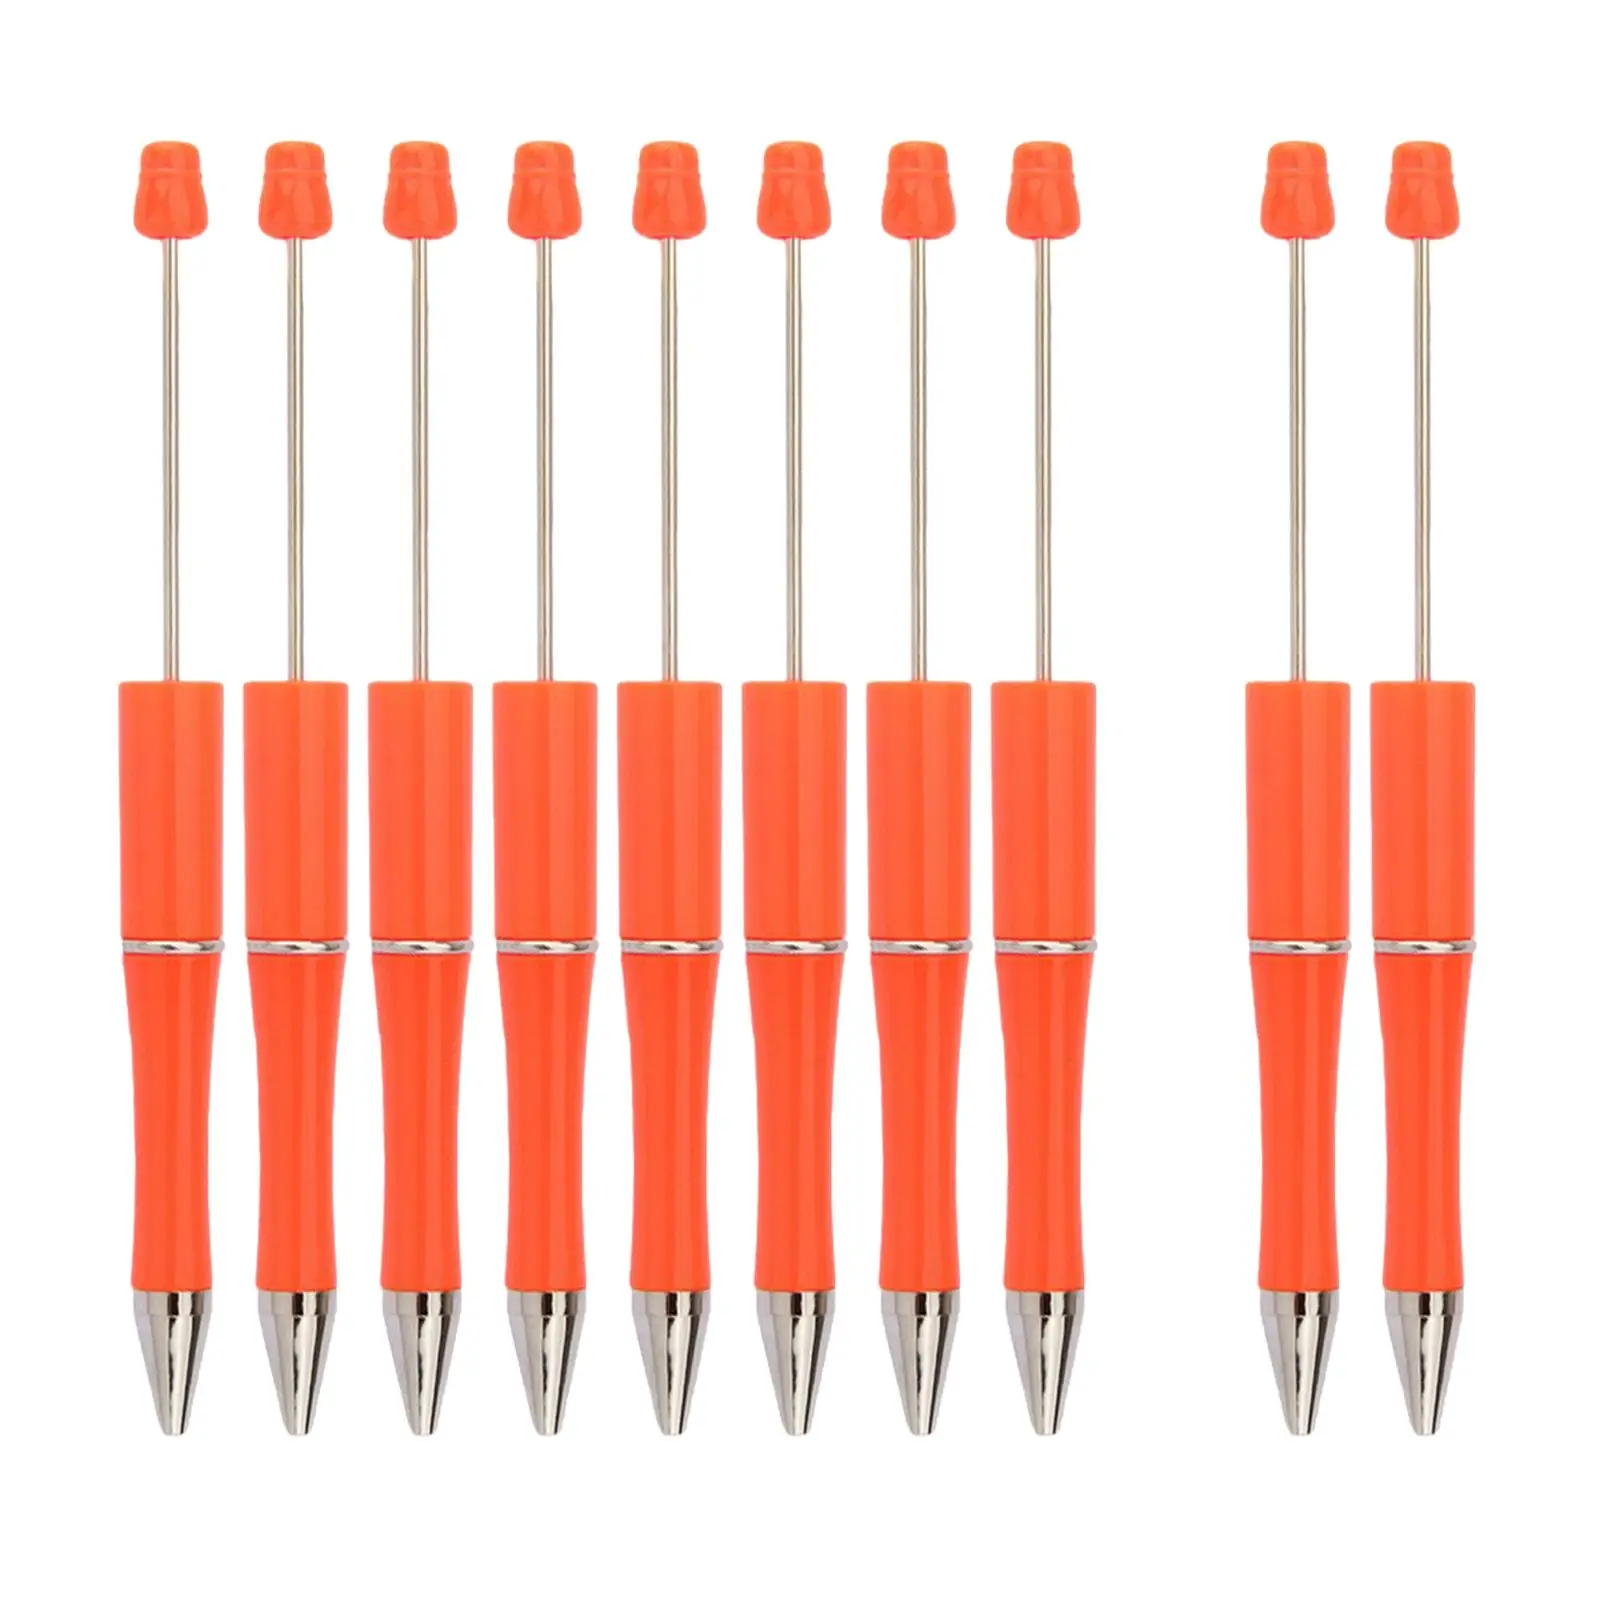 10 Pieces Beaded Pen DIY Crafting Pens for DIY Pen Kits Gift Supplies School